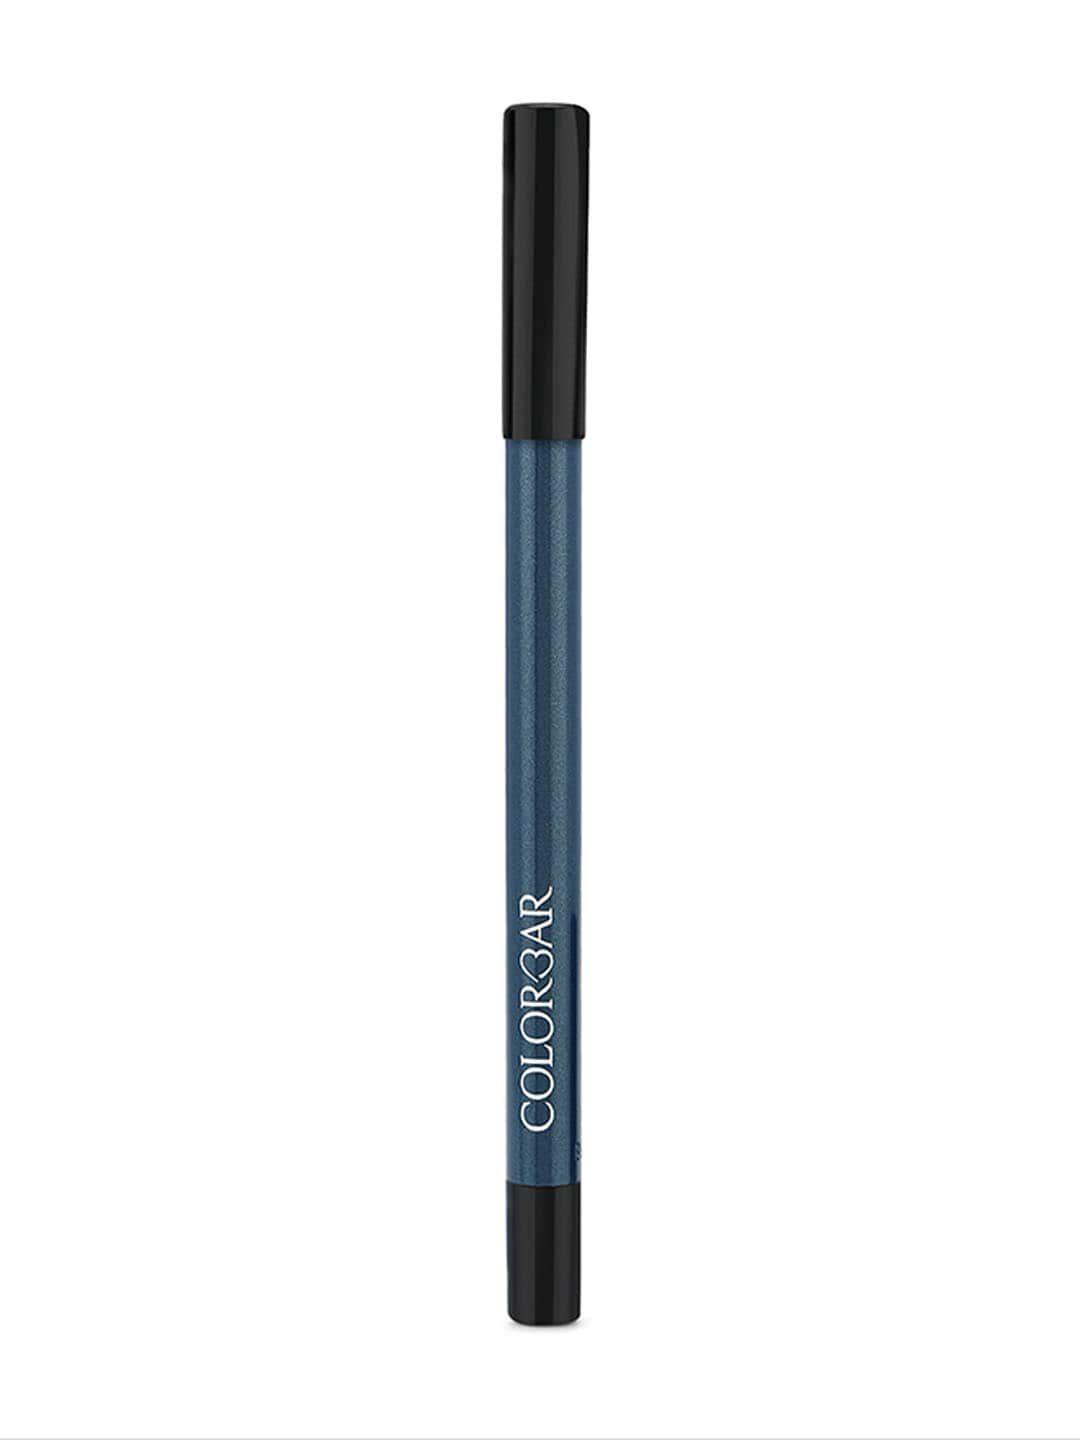 colorbar long-lasting waterproof i-glide eye pencil - flirty turq